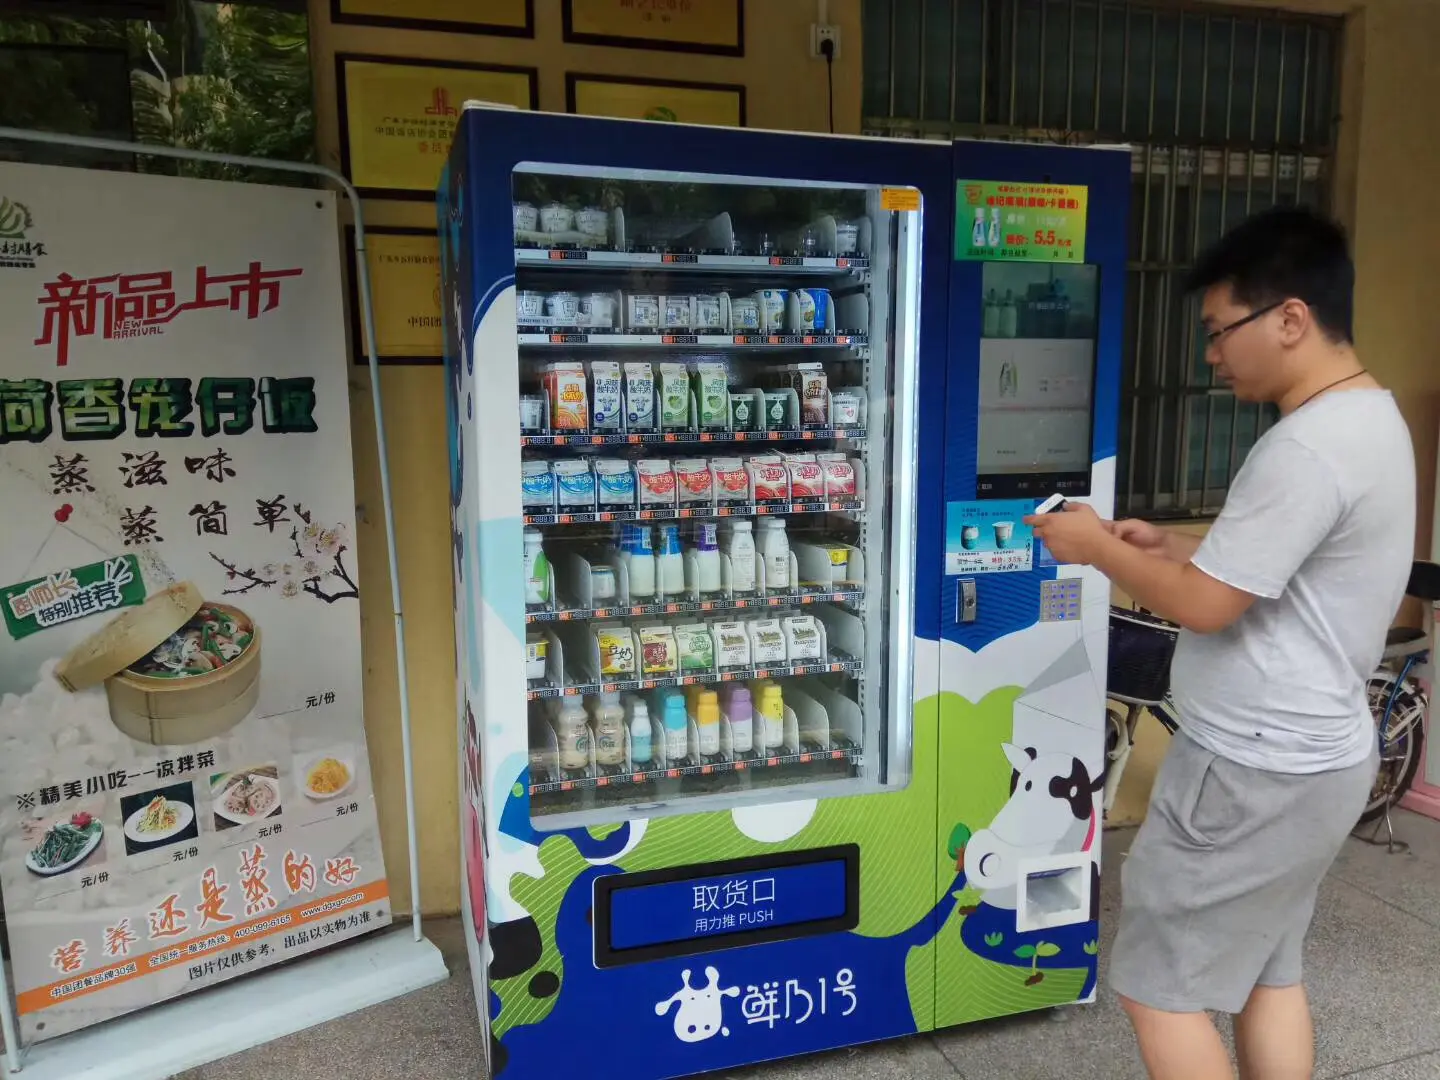 bakery vending machine